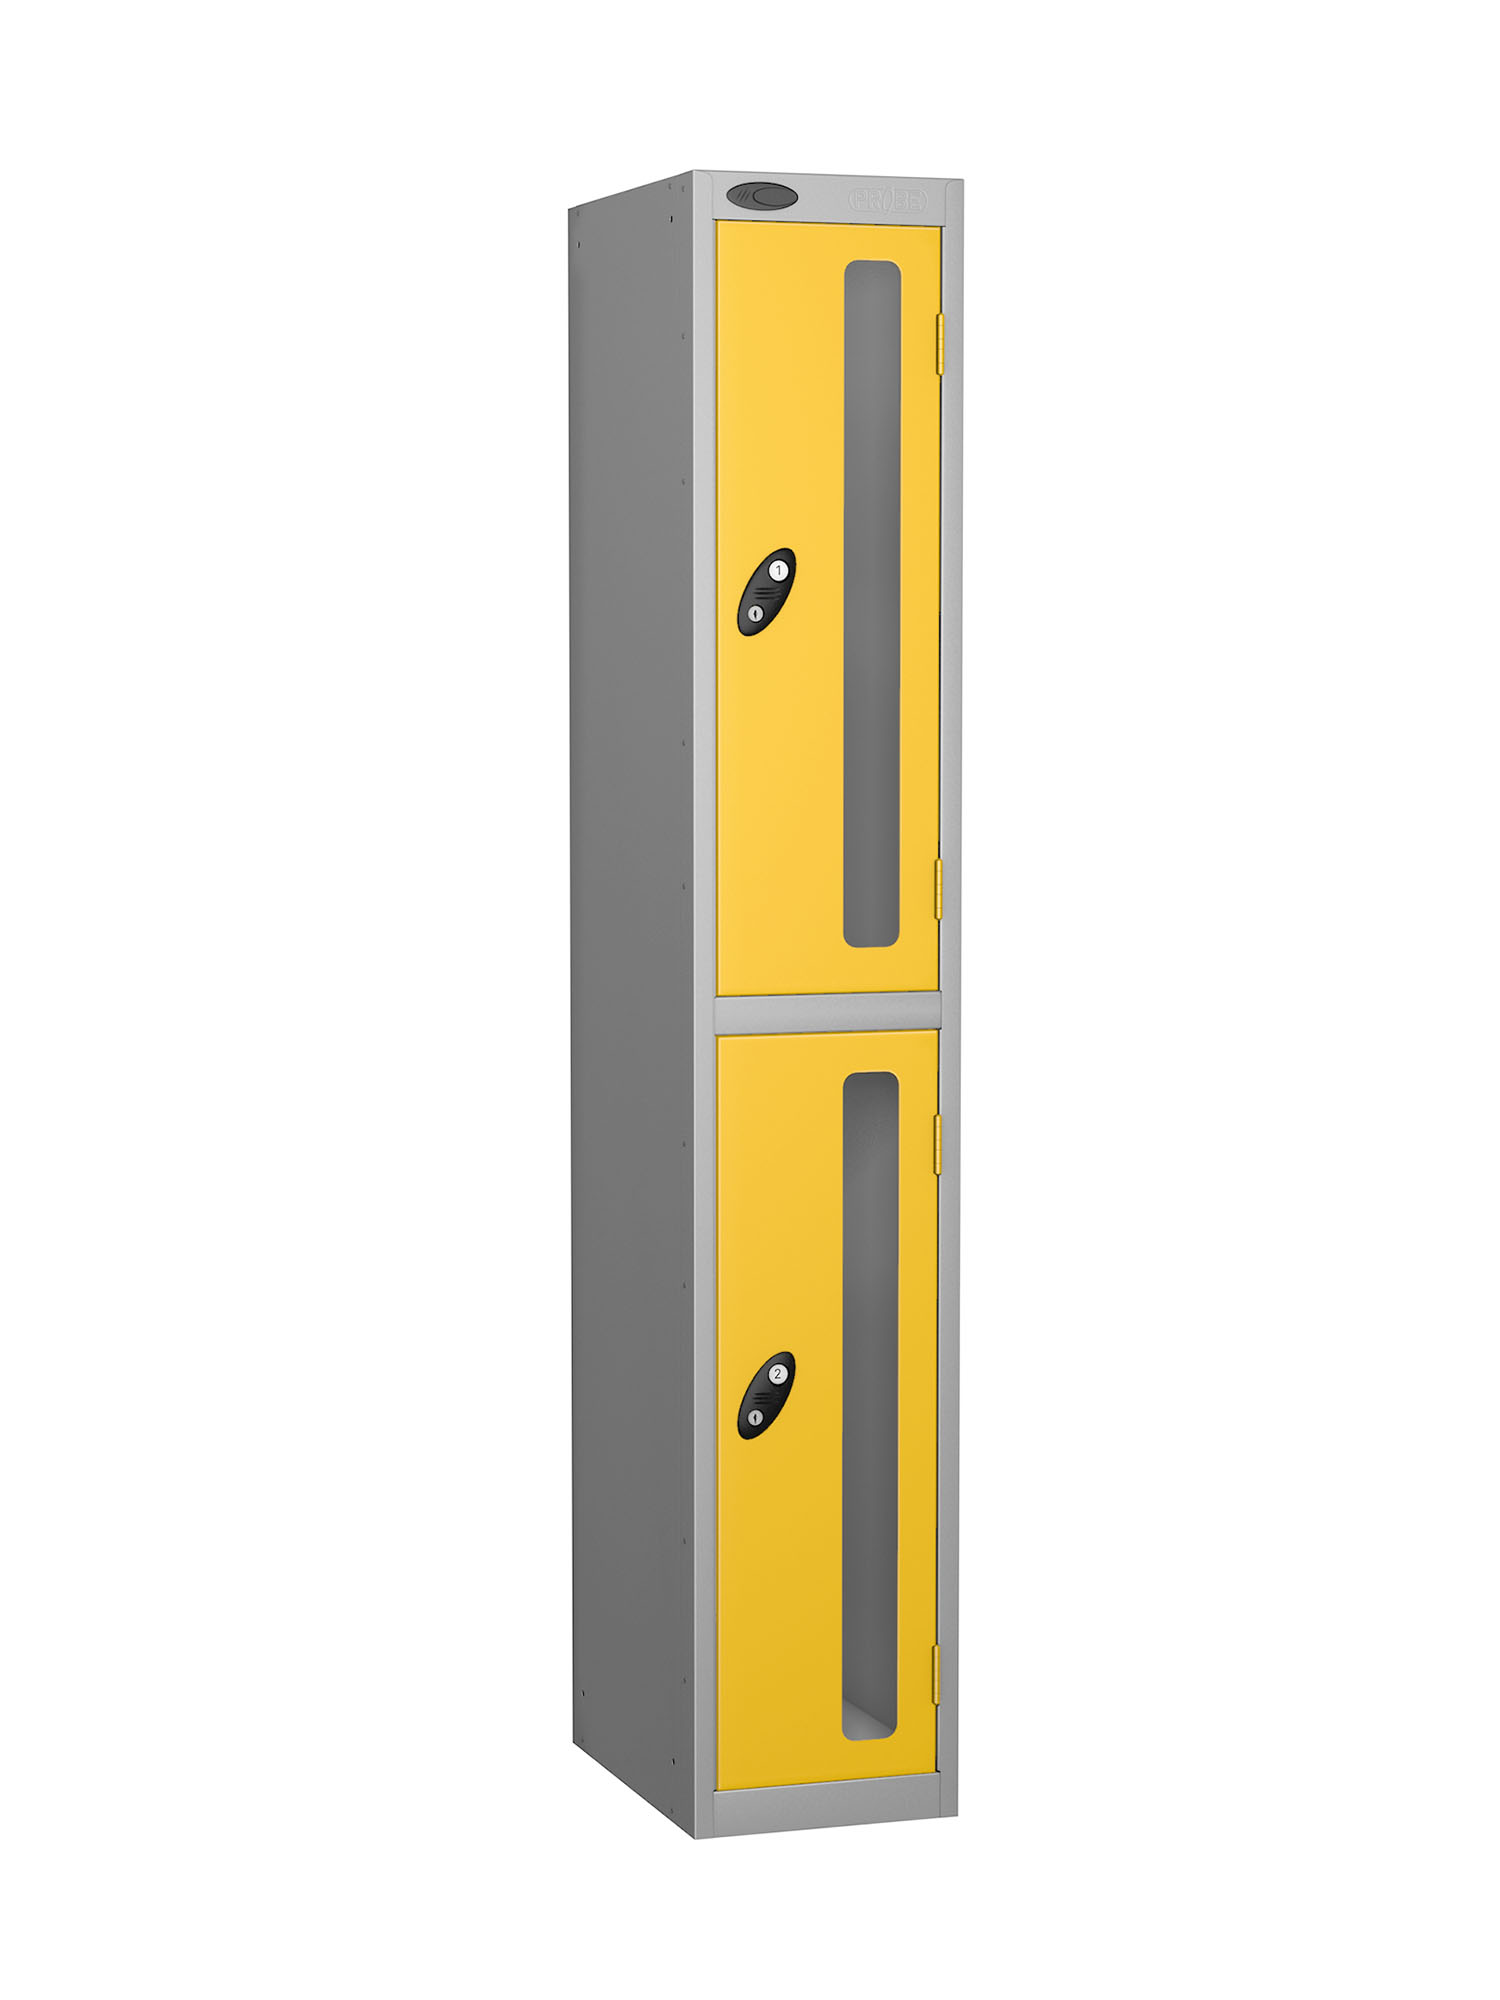 Probe 2 doors vision panel anti-stock theft locker yellow